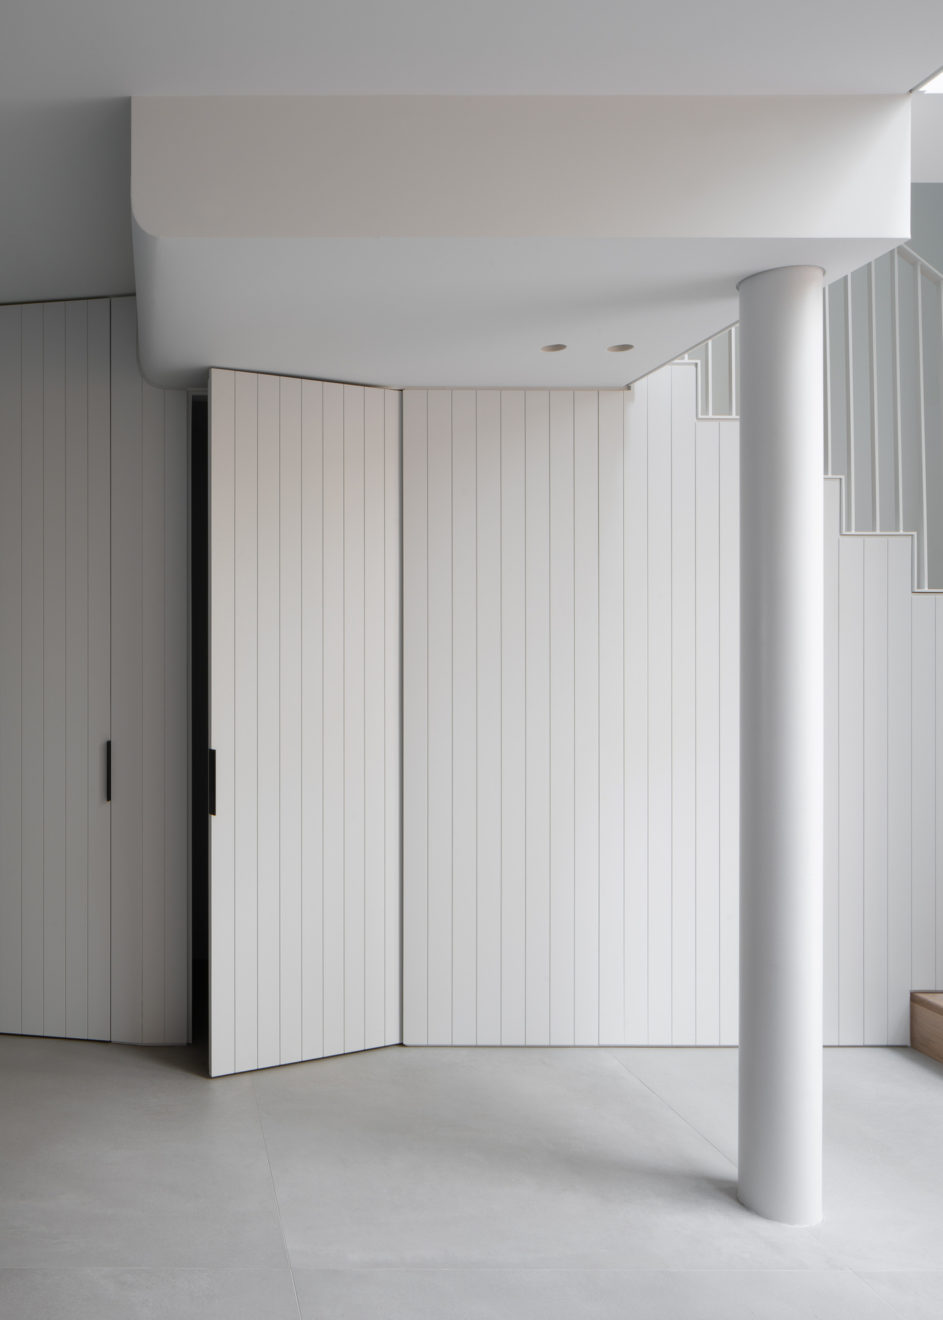 Reeded House - Oliver Leech Architects - Aucoot Estate Agent - Ståle Eriksen